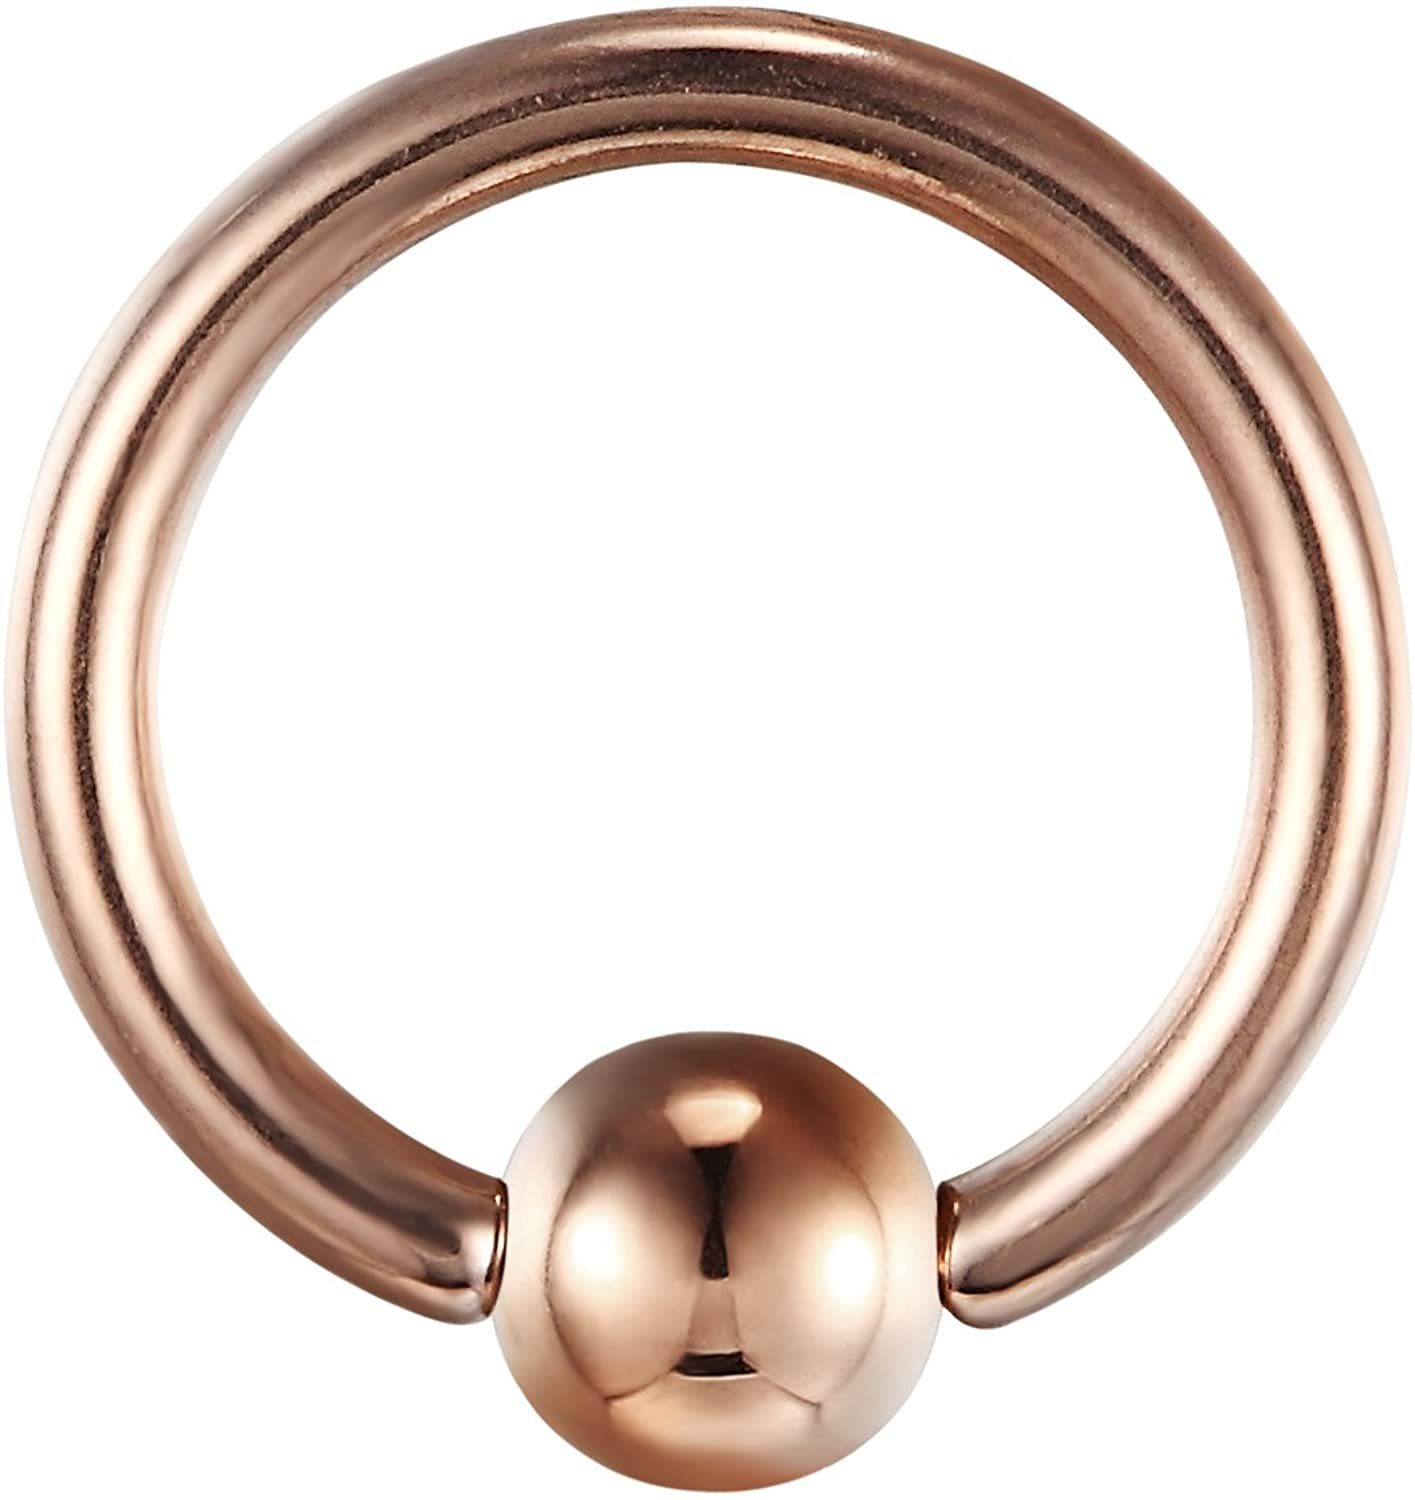 Karisma Piercing-Set Karisma Titan Roségold G23 BCR Klemmring Nasen Septum Ohrpiercing Ball Closure Ring Stärke 1,2mm - 7.0 Millimeter